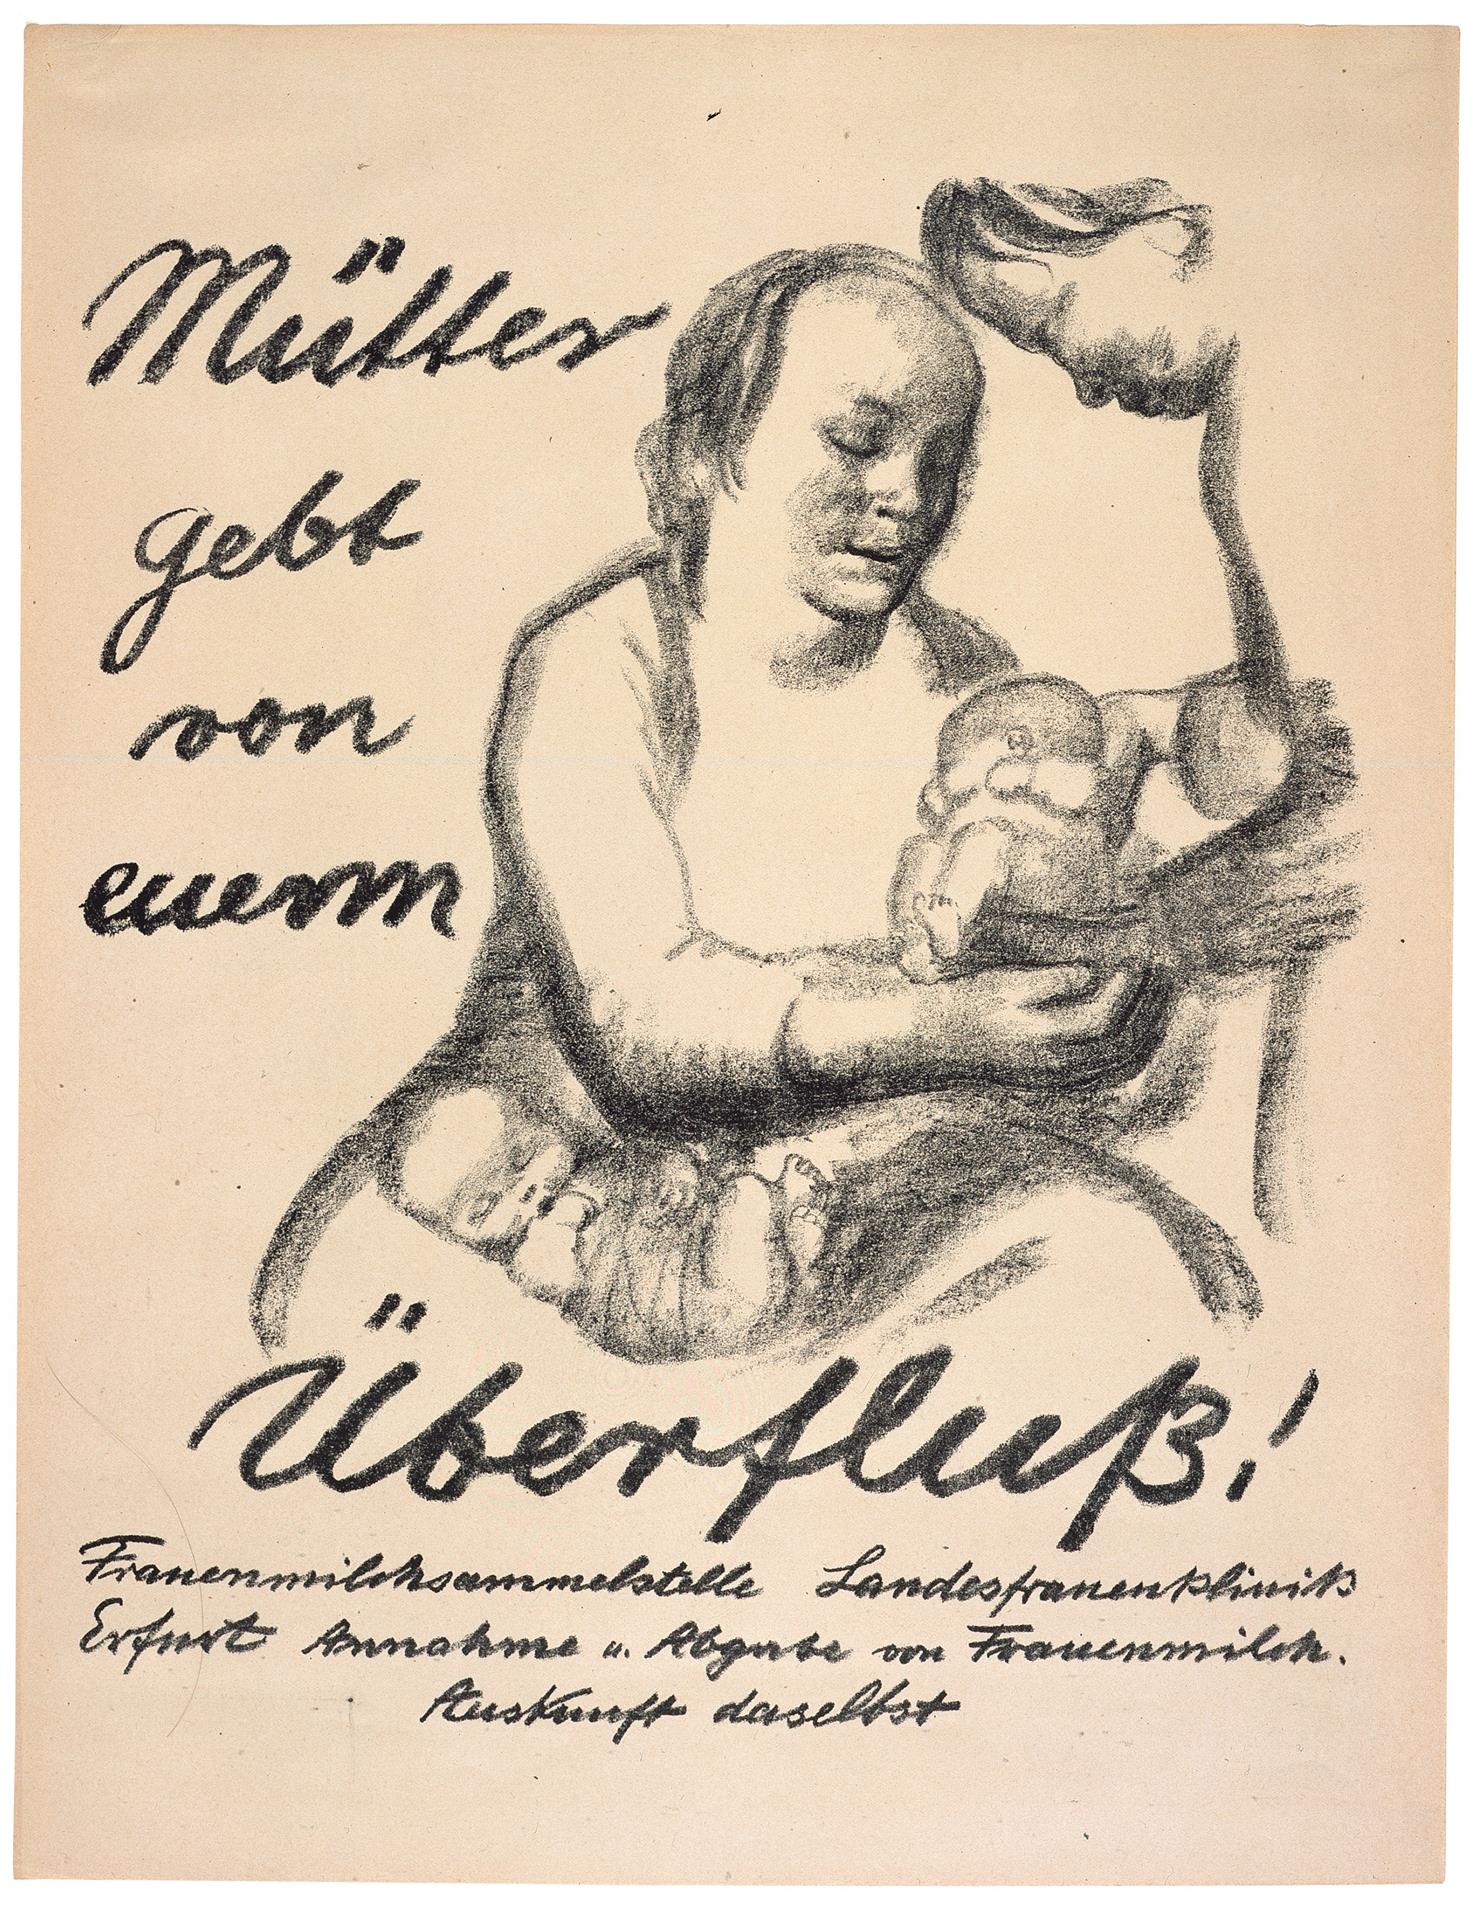 Käthe Kollwitz, Poster »Mothers, share your Abundance!«, 1926, crayon lithograph (transfer), Kn 227 IIIb, Cologne Kollwitz Collection © Käthe Kollwitz Museum Köln